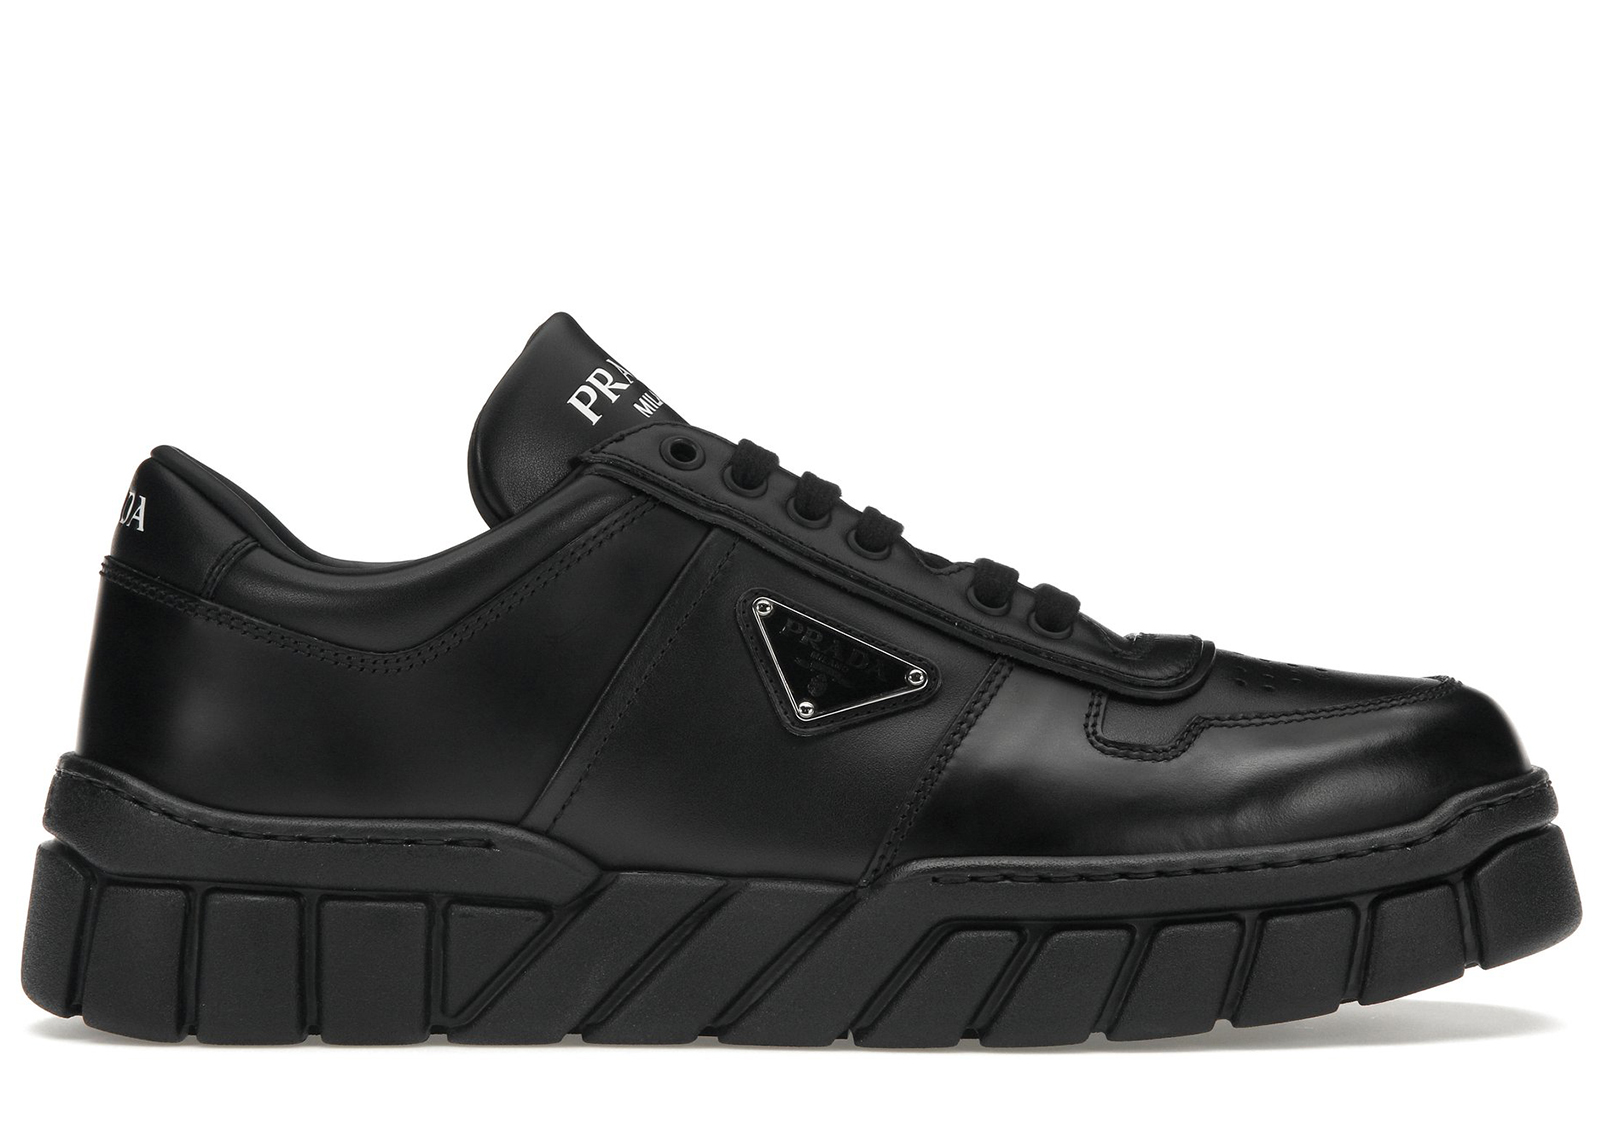 Prada Cloudbust Thunder Sneakers Black (Women's) - 1E819LF0503KR2 